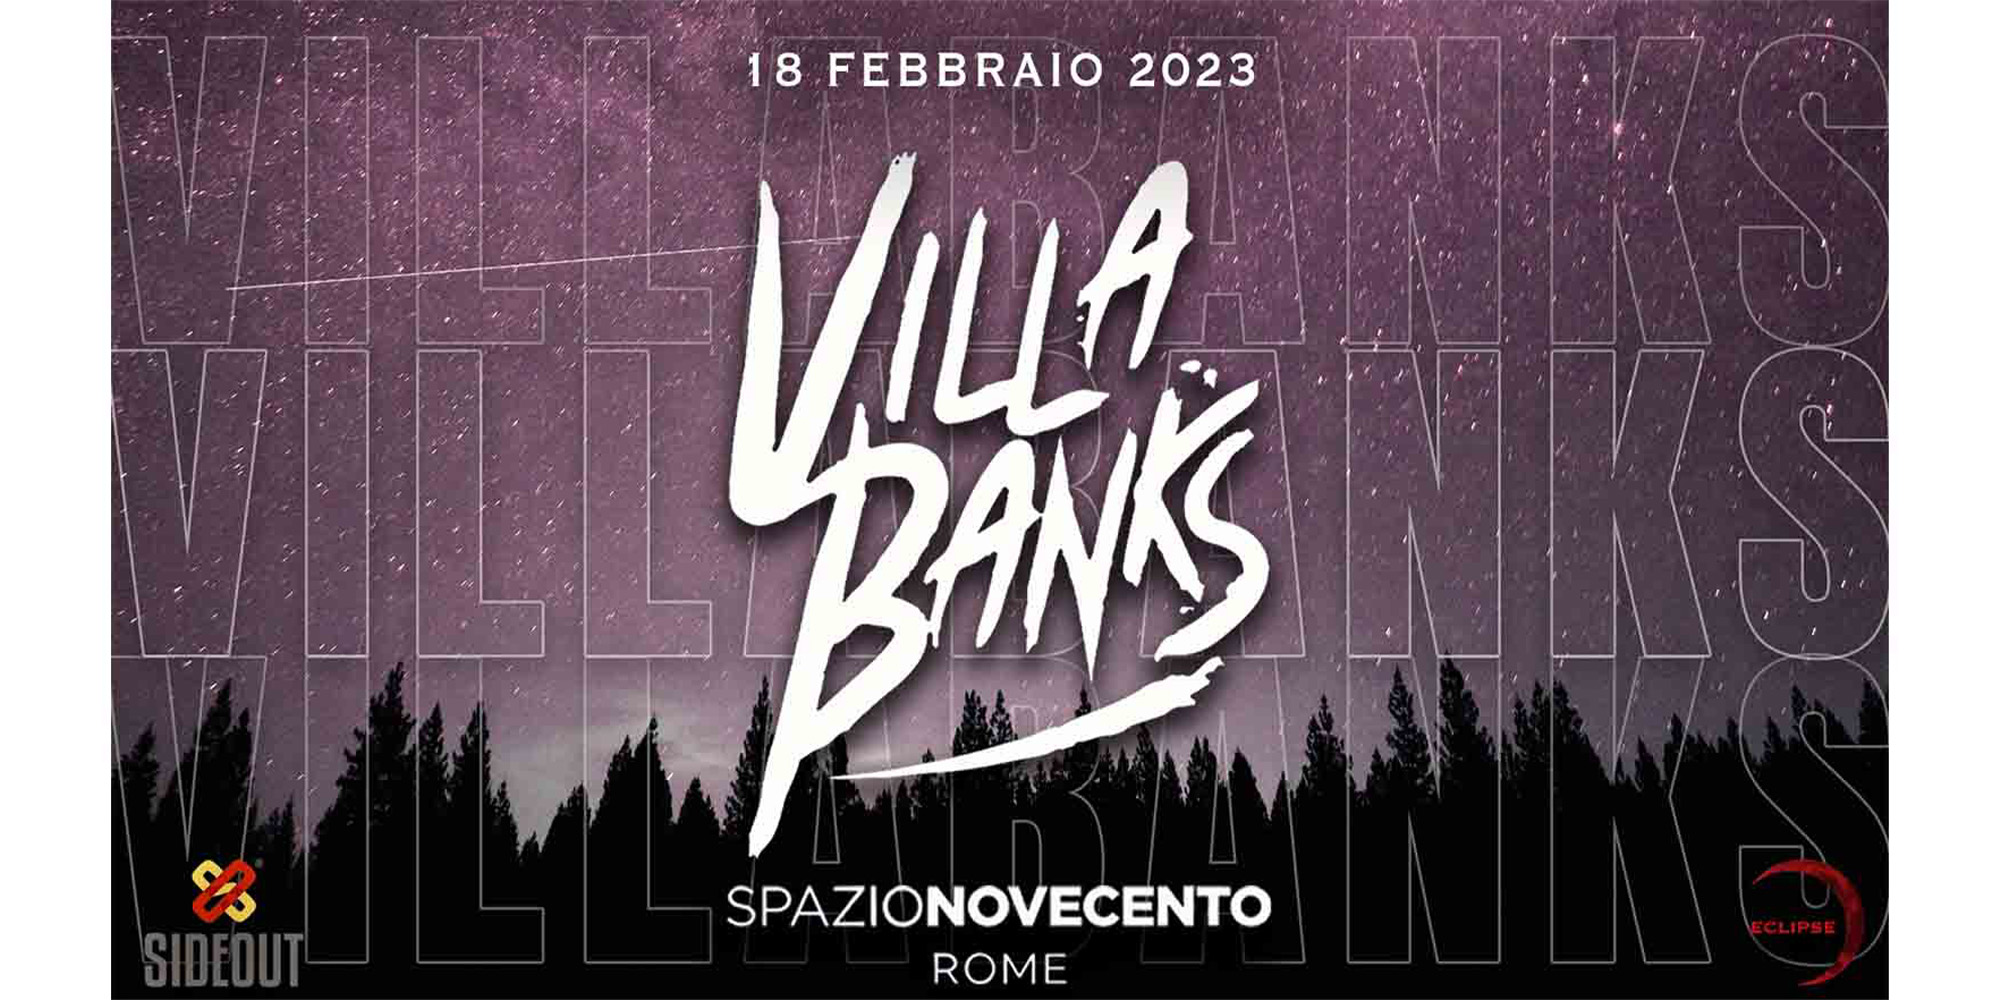 villabanks-spazionovecento-2023